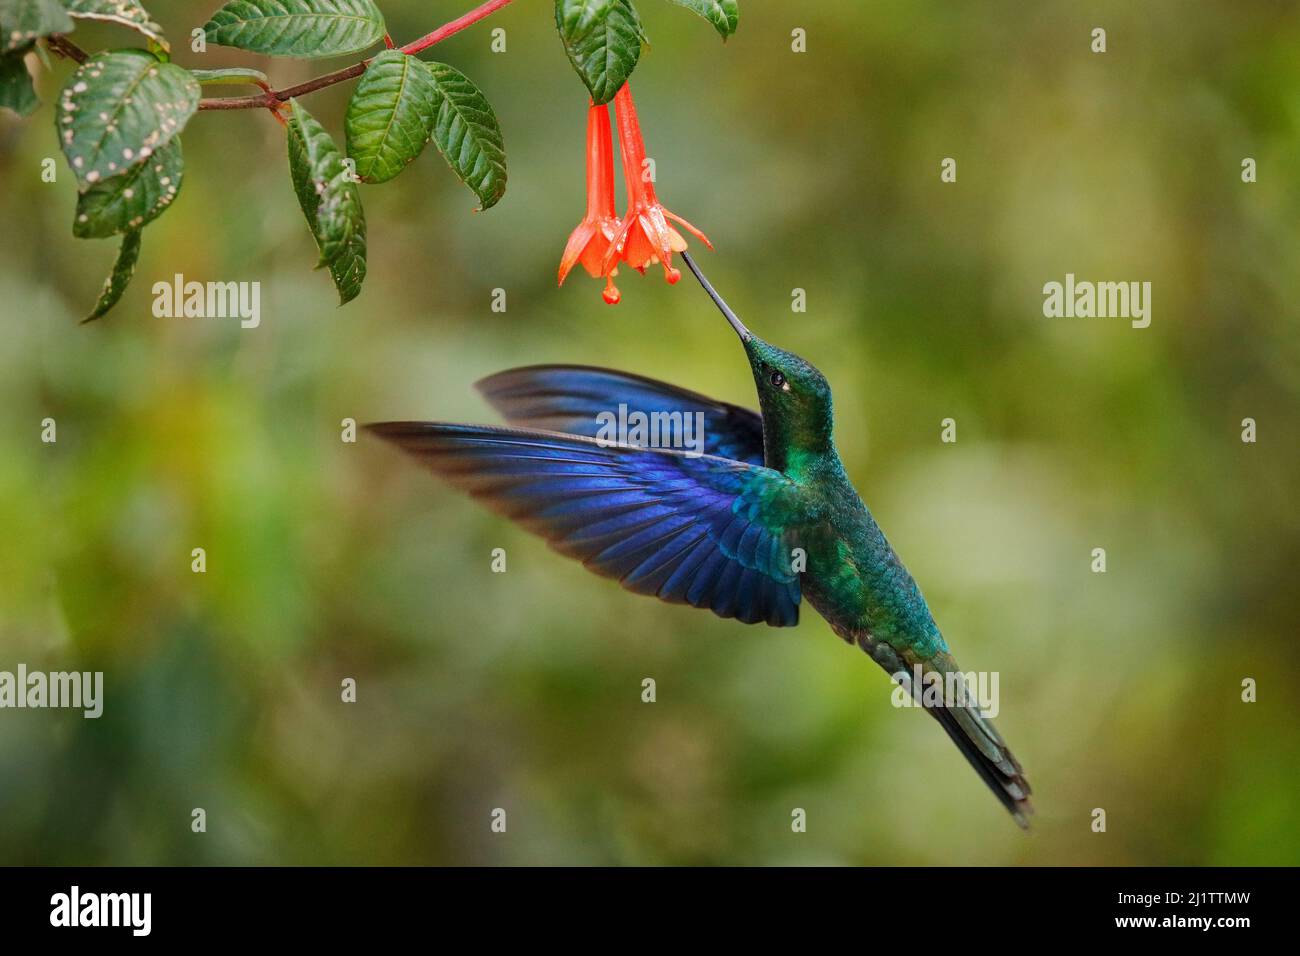 Ecuador wildlife. Great sapphirewing, Pterophanes cyanopterus, big blue hummingbird, Yanacocha, Pichincha in Ecuador. Bird sucking nectar from red flo Stock Photo